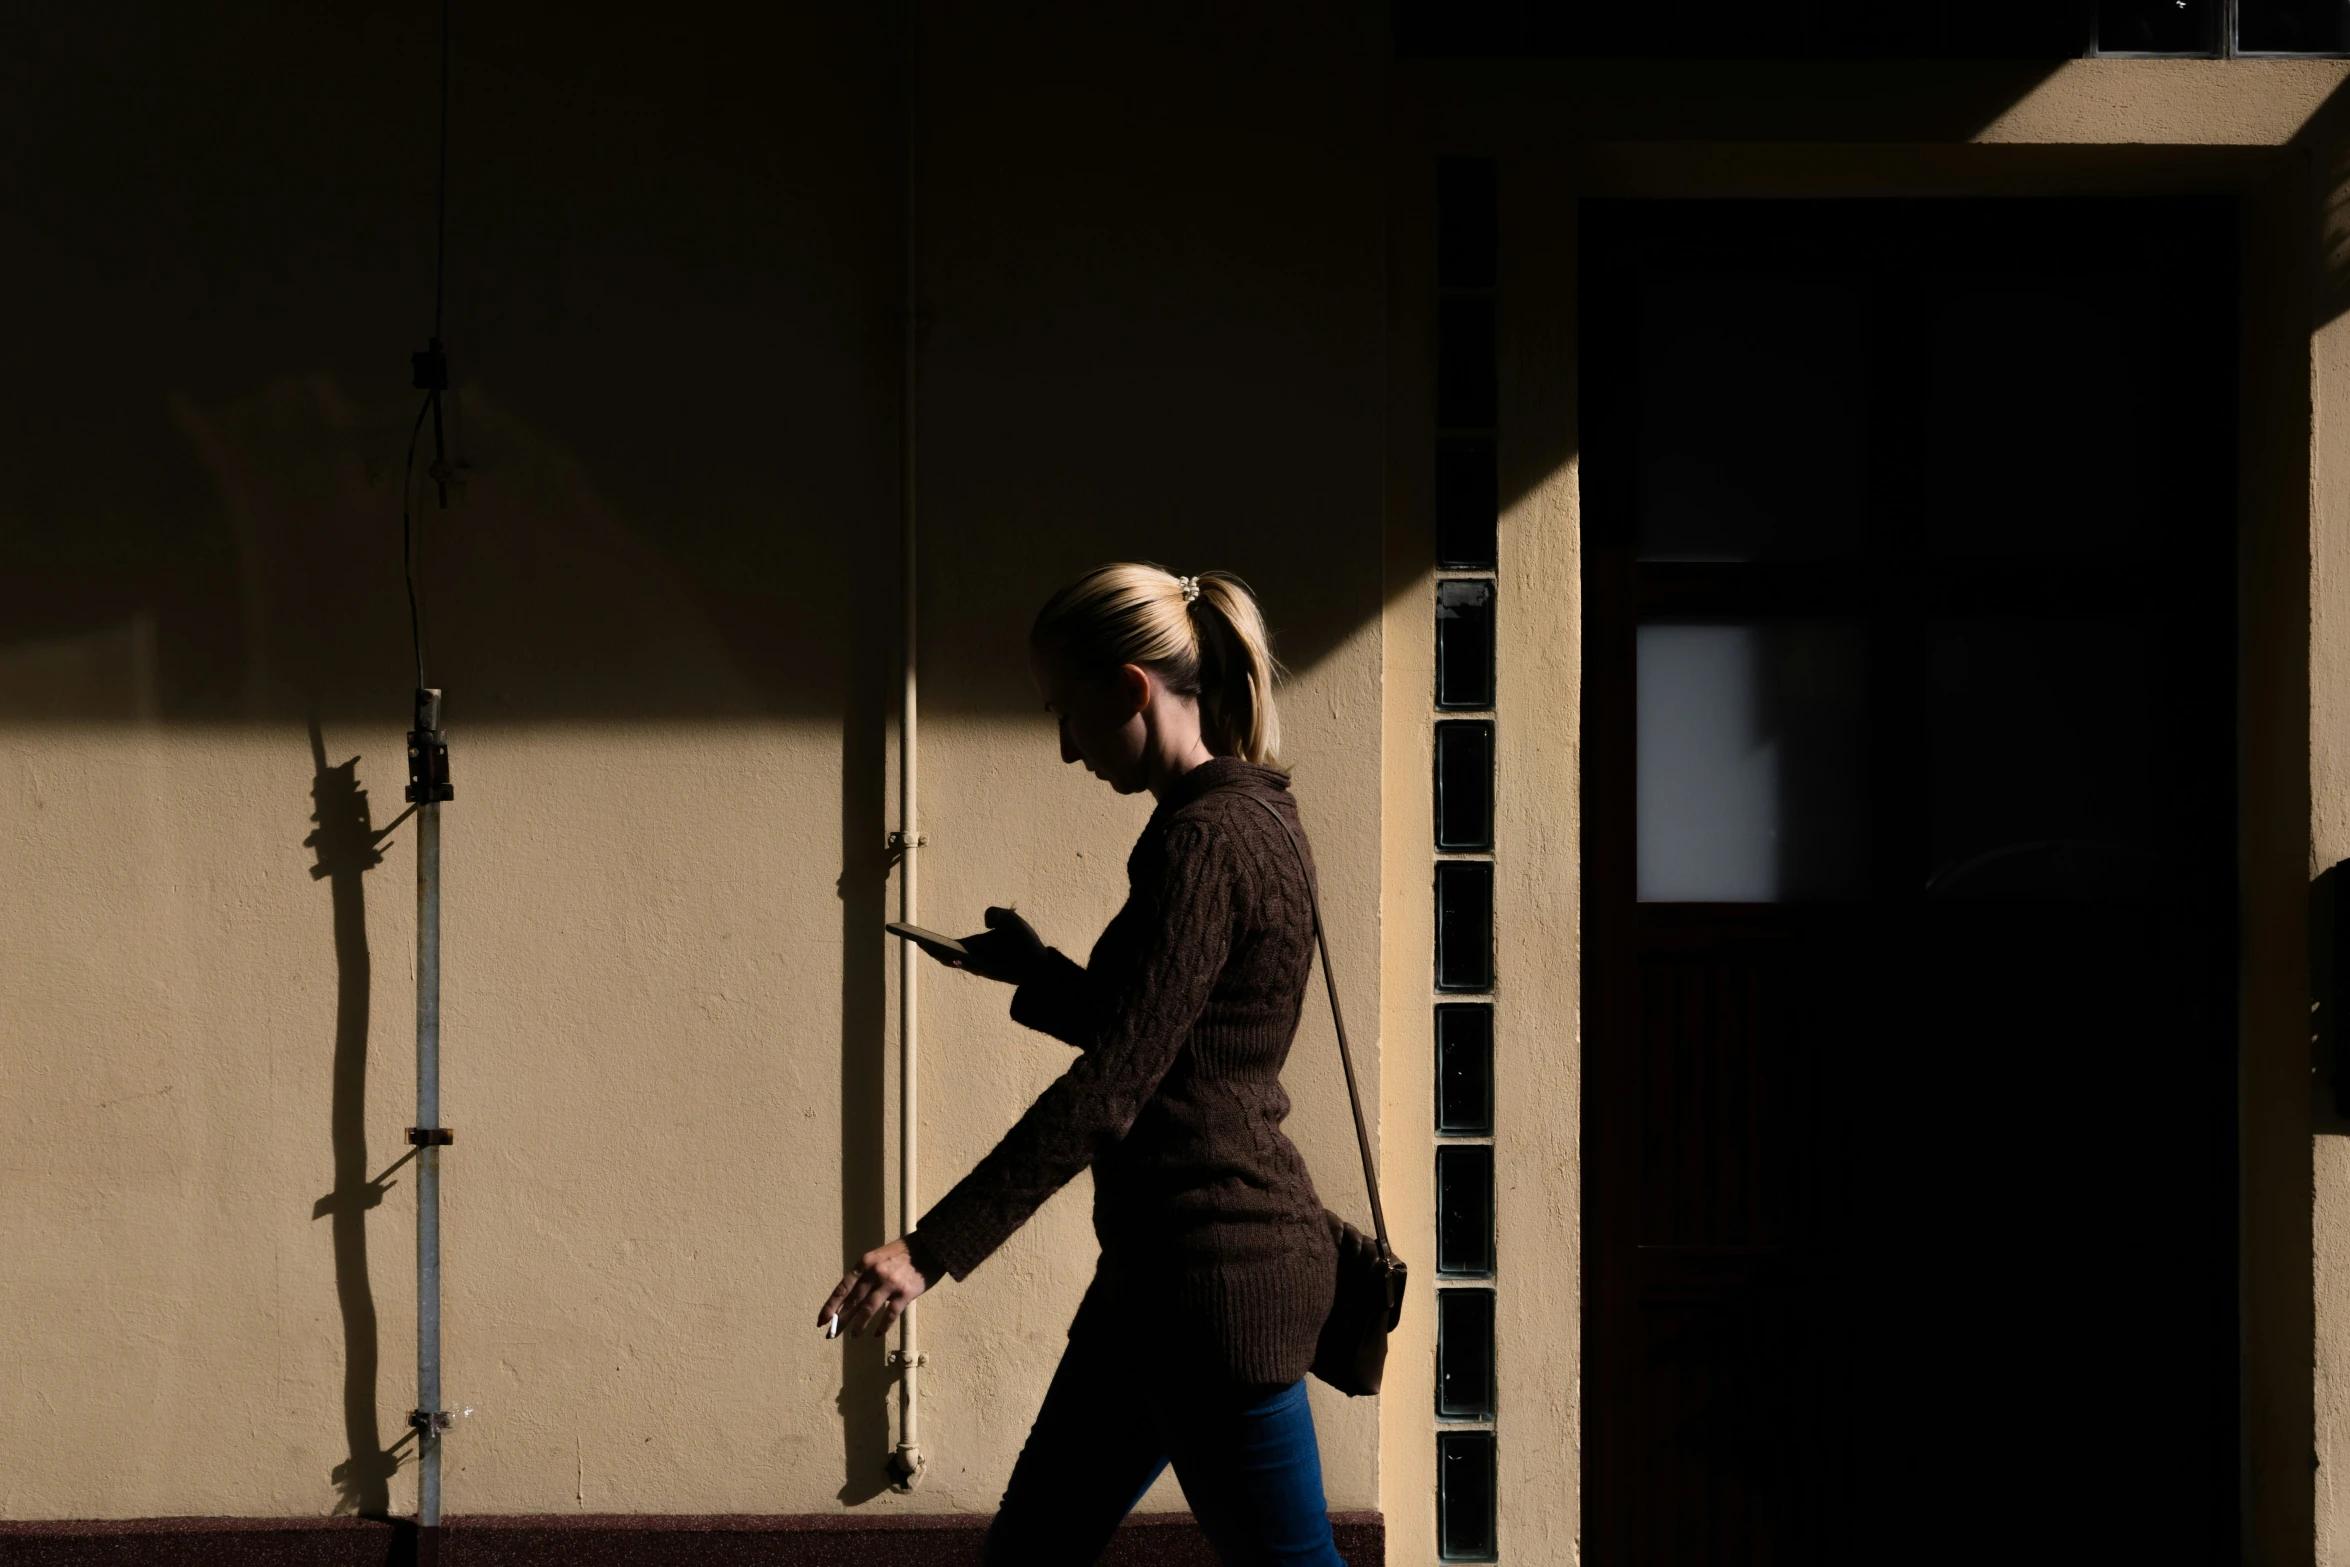 a woman walking down the street in dark shadows